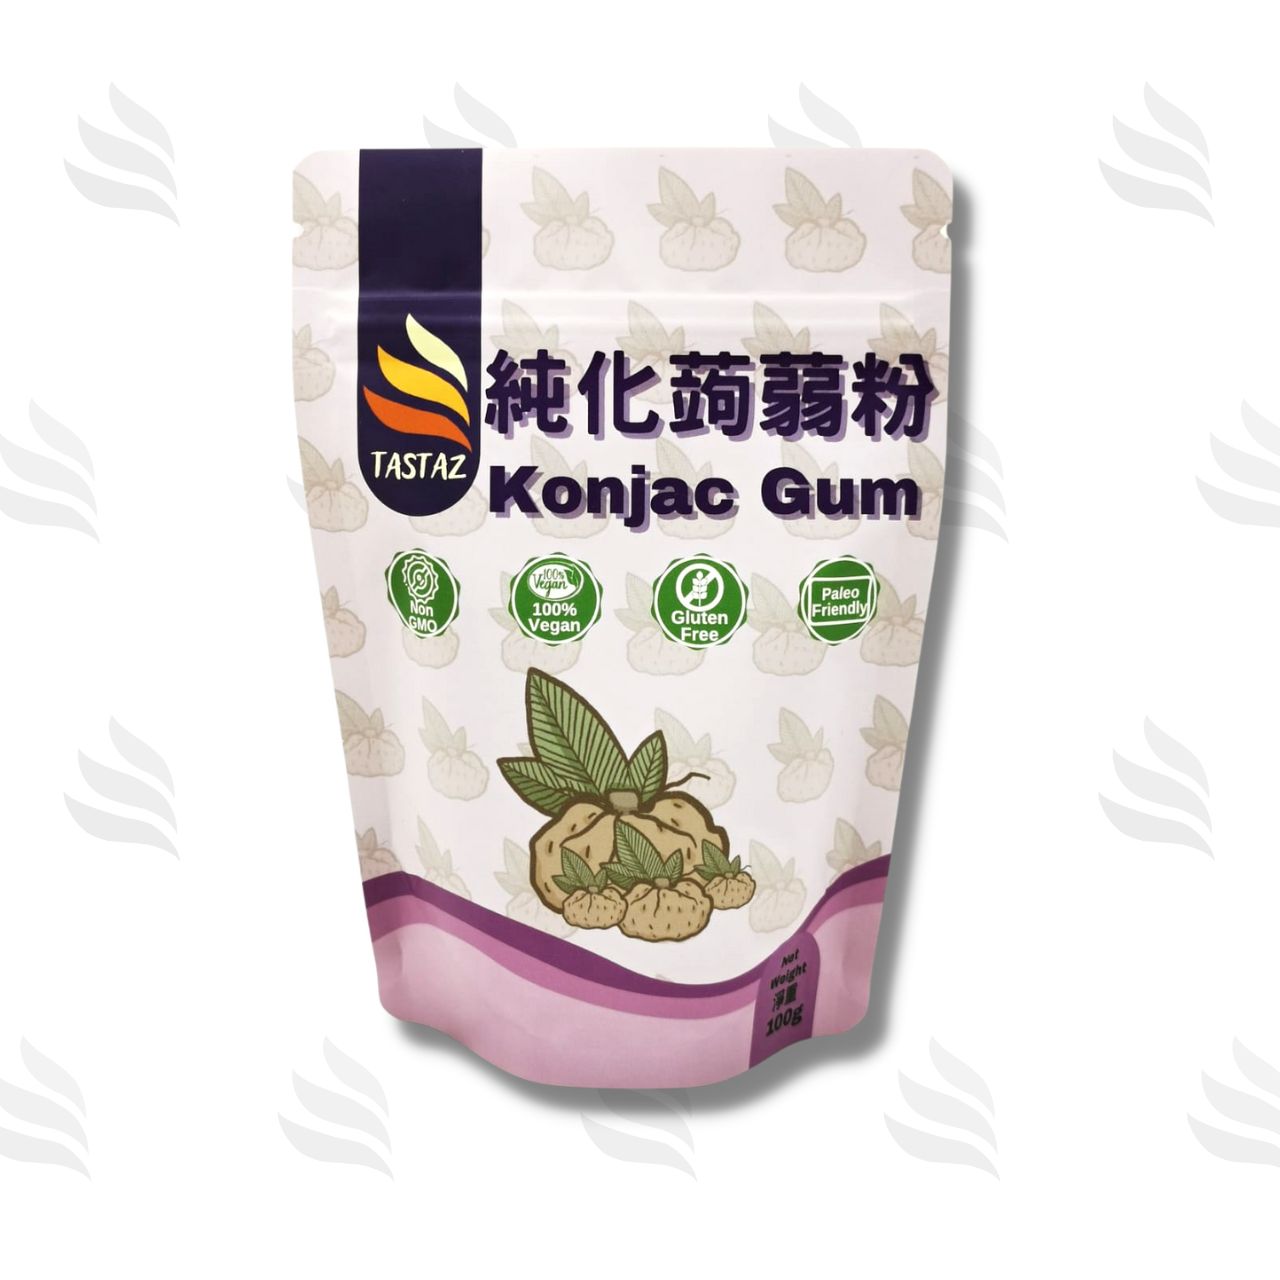 Tastaz Konjac Gum 純化蒟蒻粉 100g